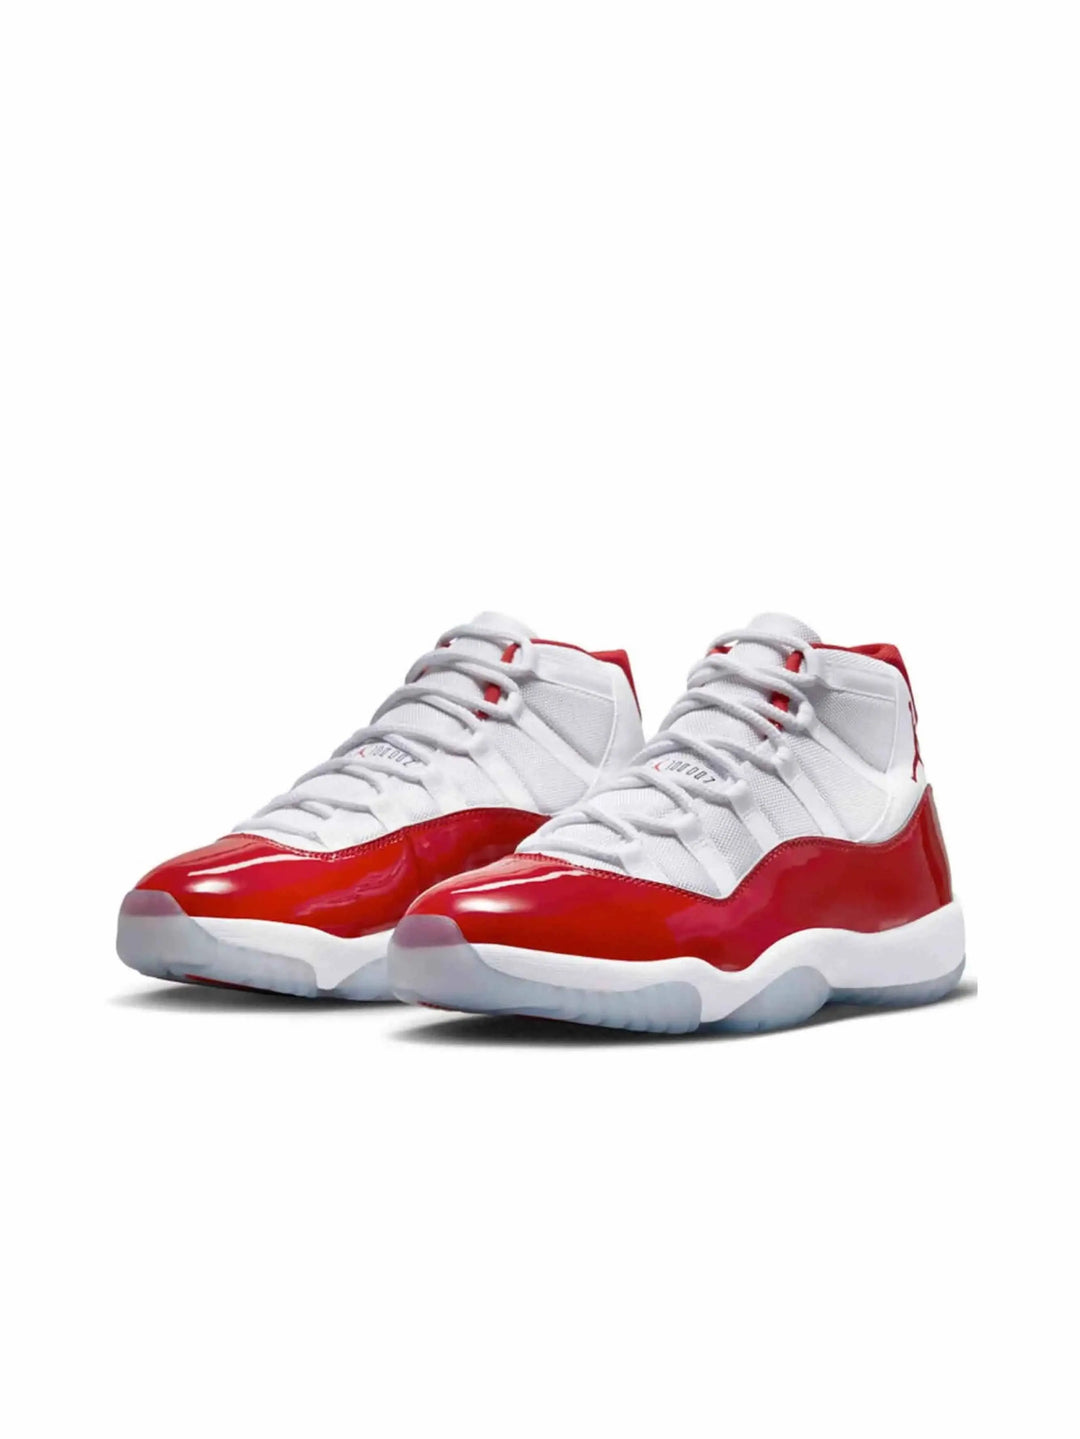 Nike Air Jordan 11 Retro Cherry (2022) Prior